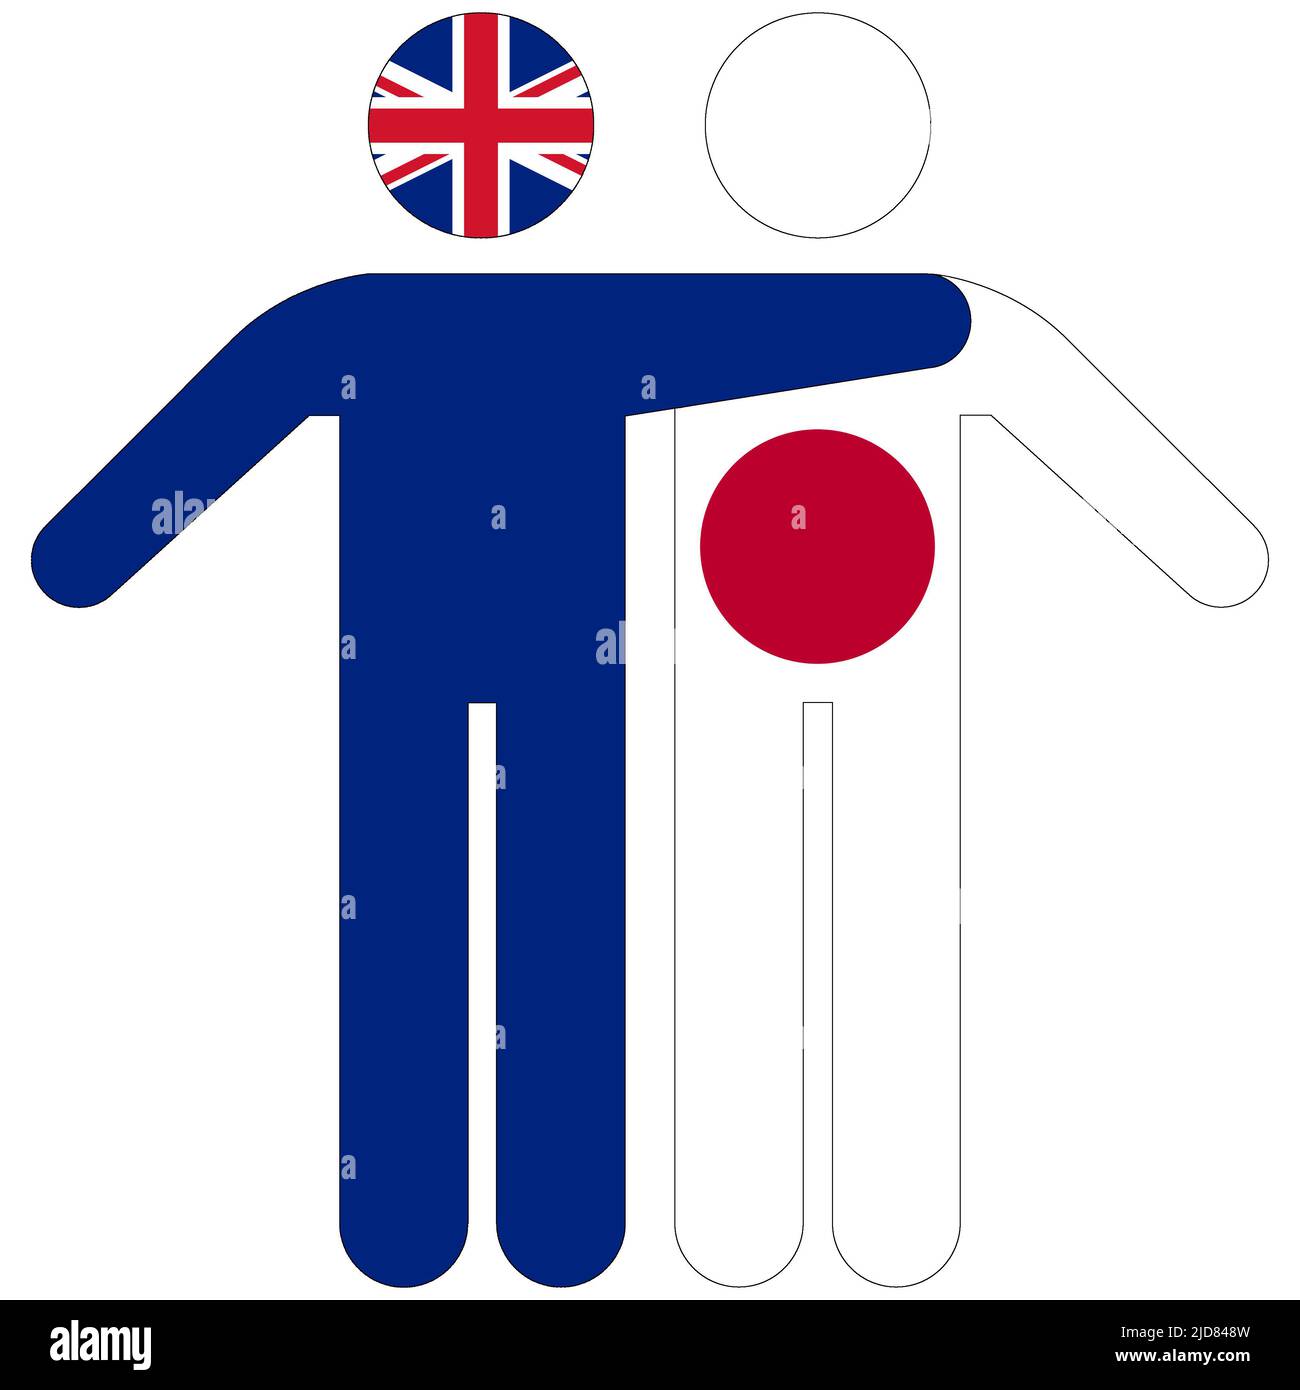 UK - Japan : friendship concept on white background Stock Photo